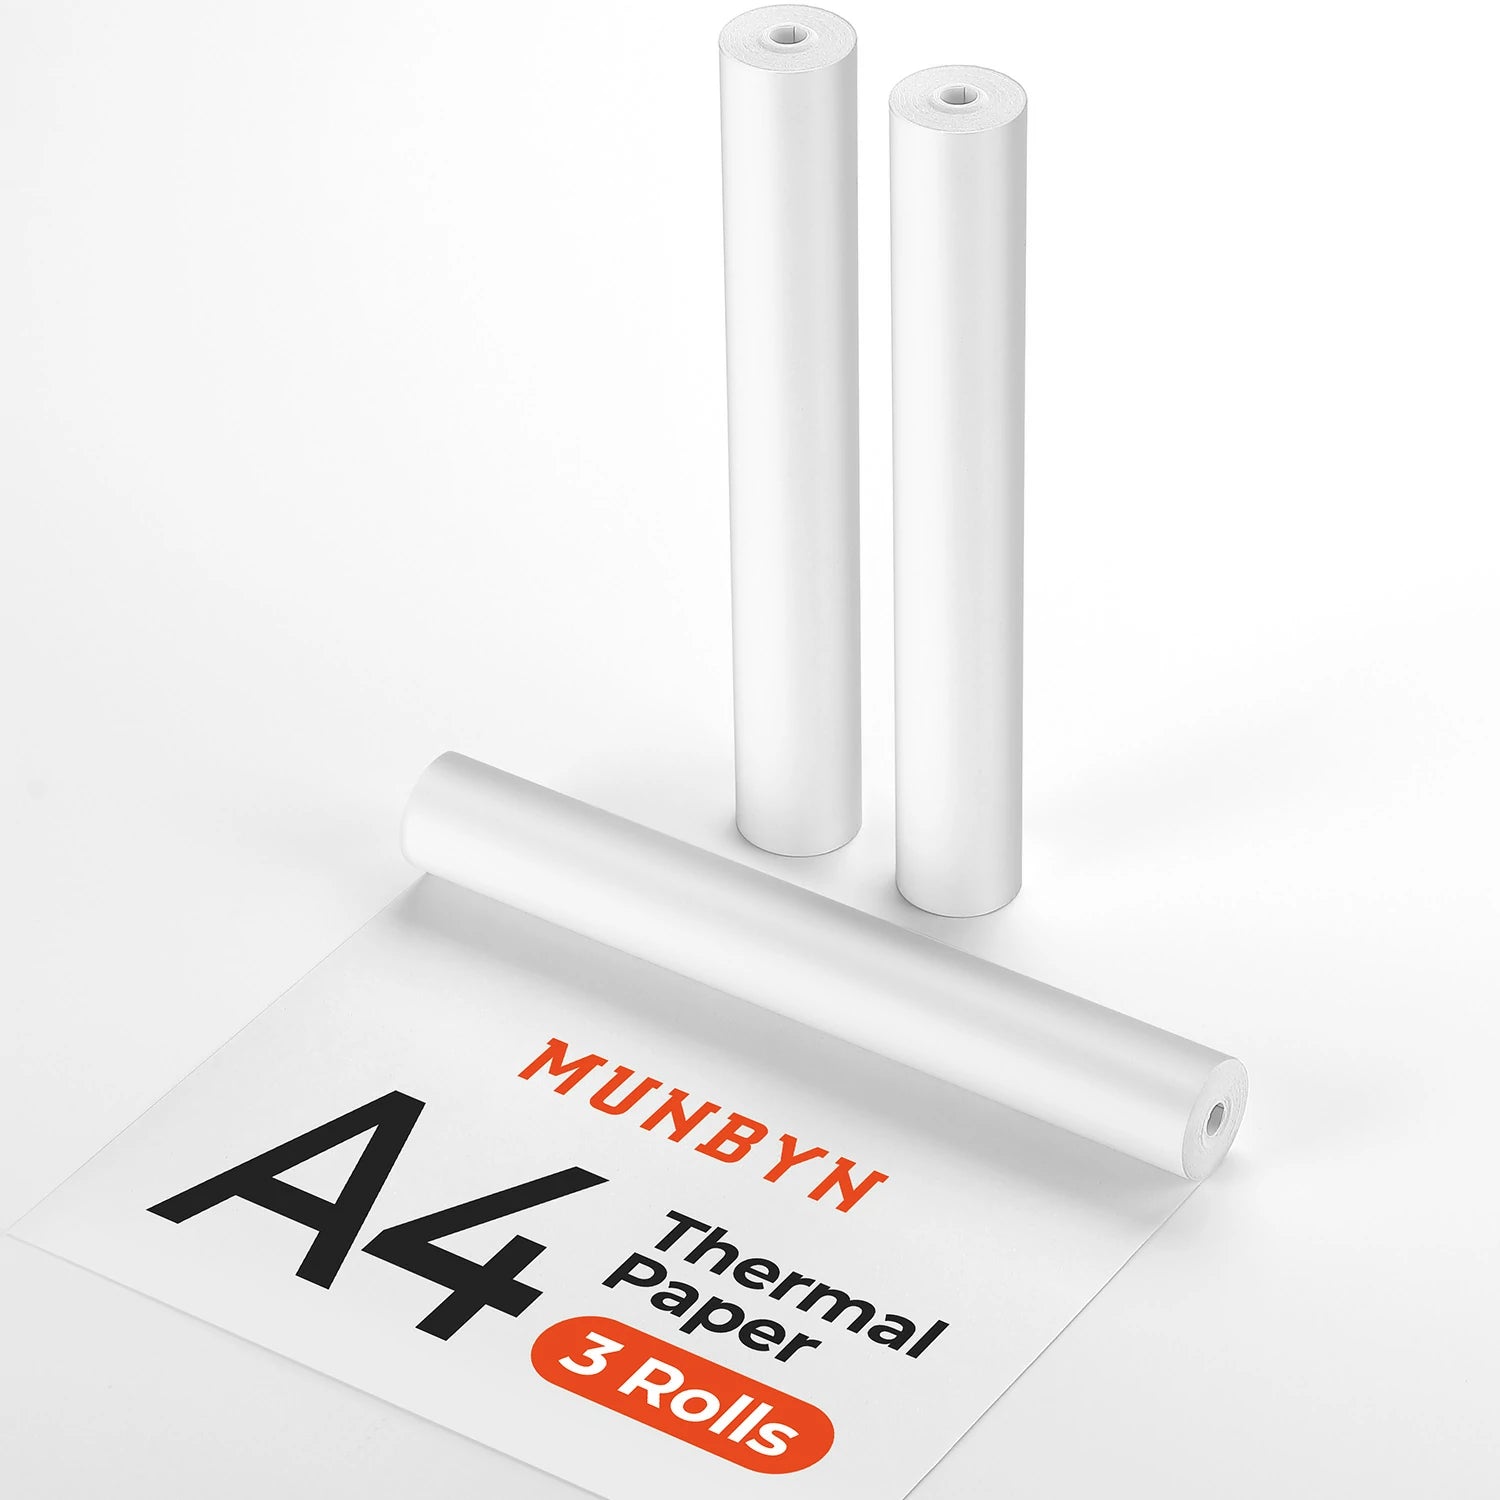 MUNBYN Bluetooth A4 Portable Thermal Printer ITP01